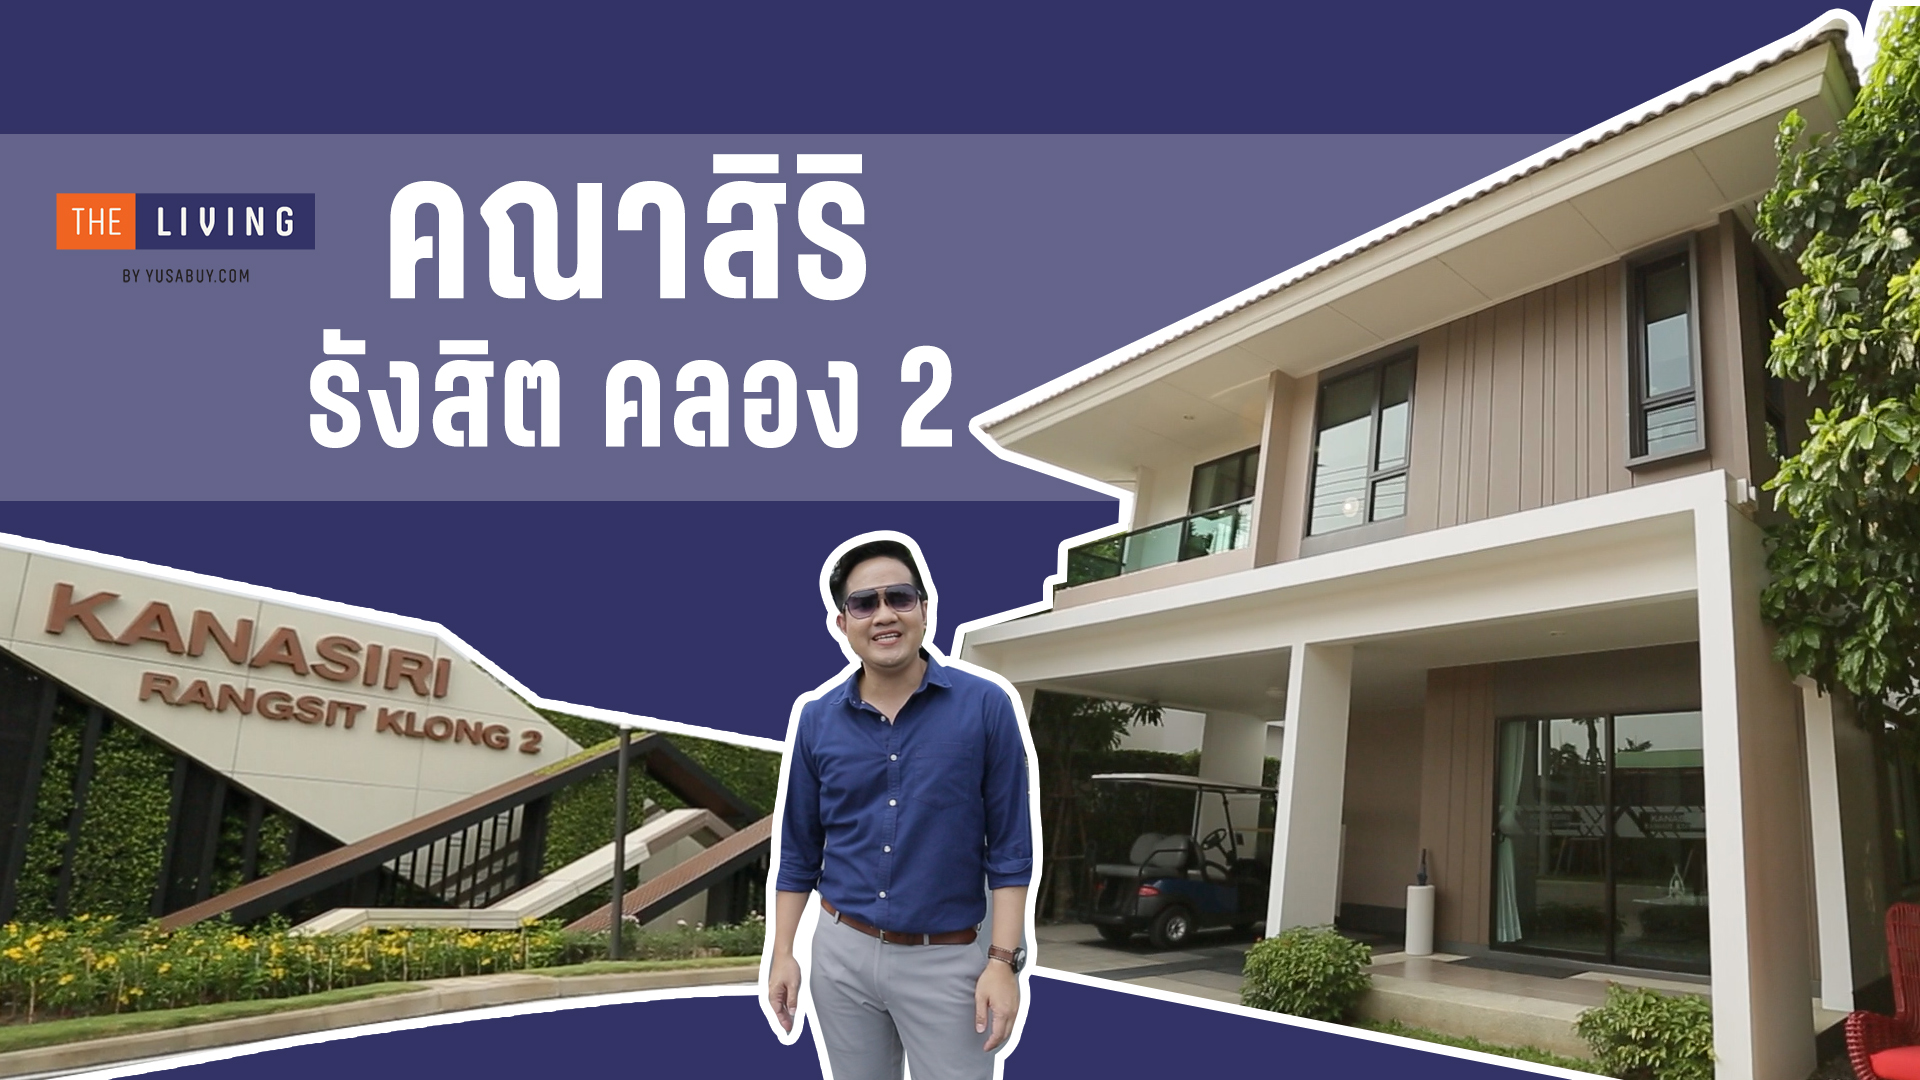 THE LIVING EP.42 รีวิว คณาสิริ รังสิต คลอง 2 (Kanasiri Rangsit-Klong 2) บ้านเดี่ยวแสนสิริ